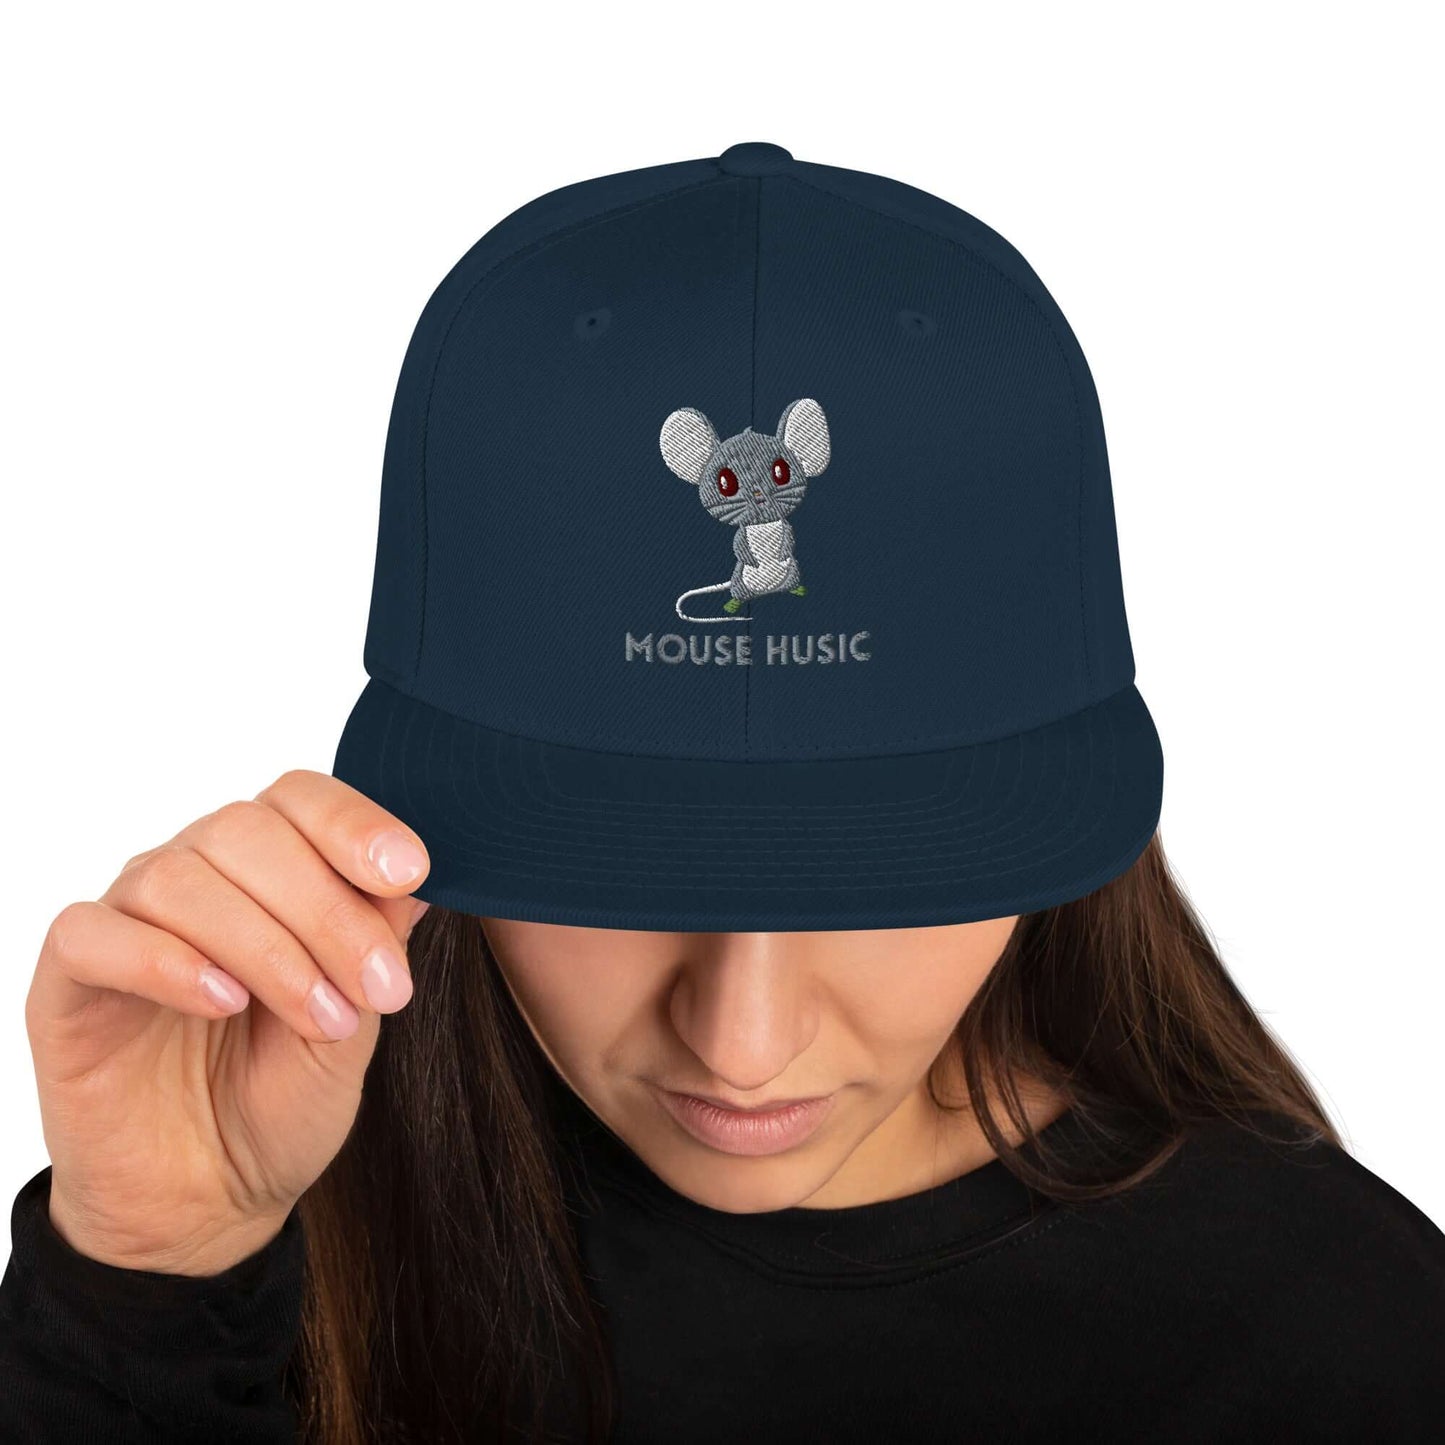 Mouse Husic Snapback Hat - Ribooa